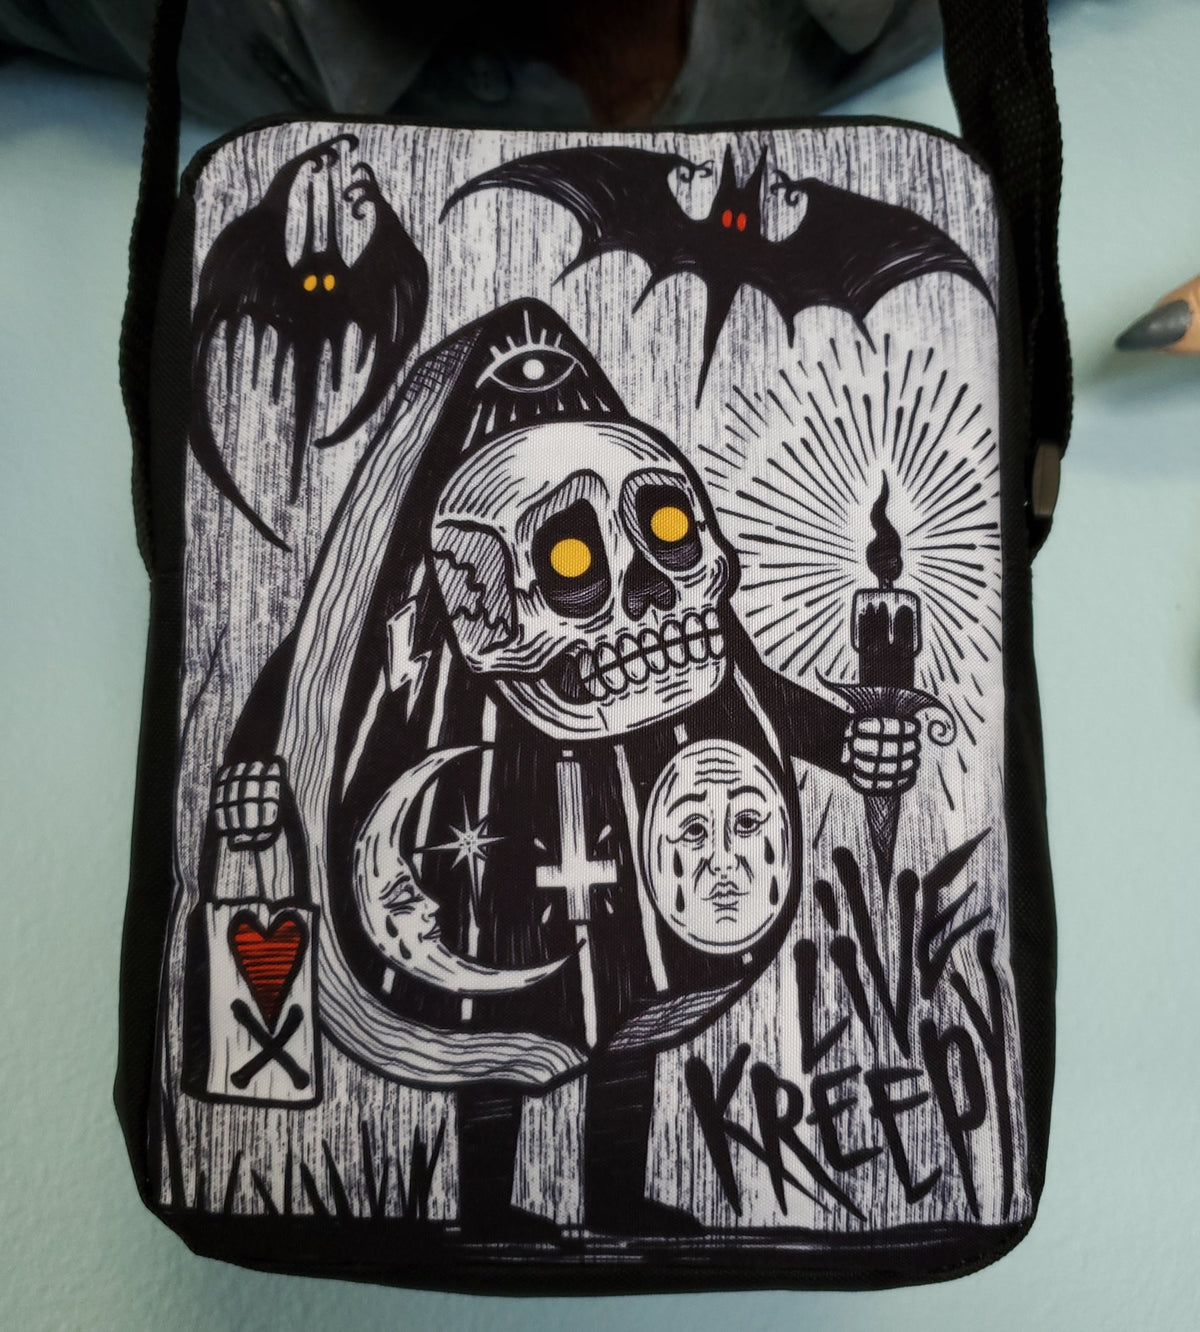 Ouija Crossbody Bag